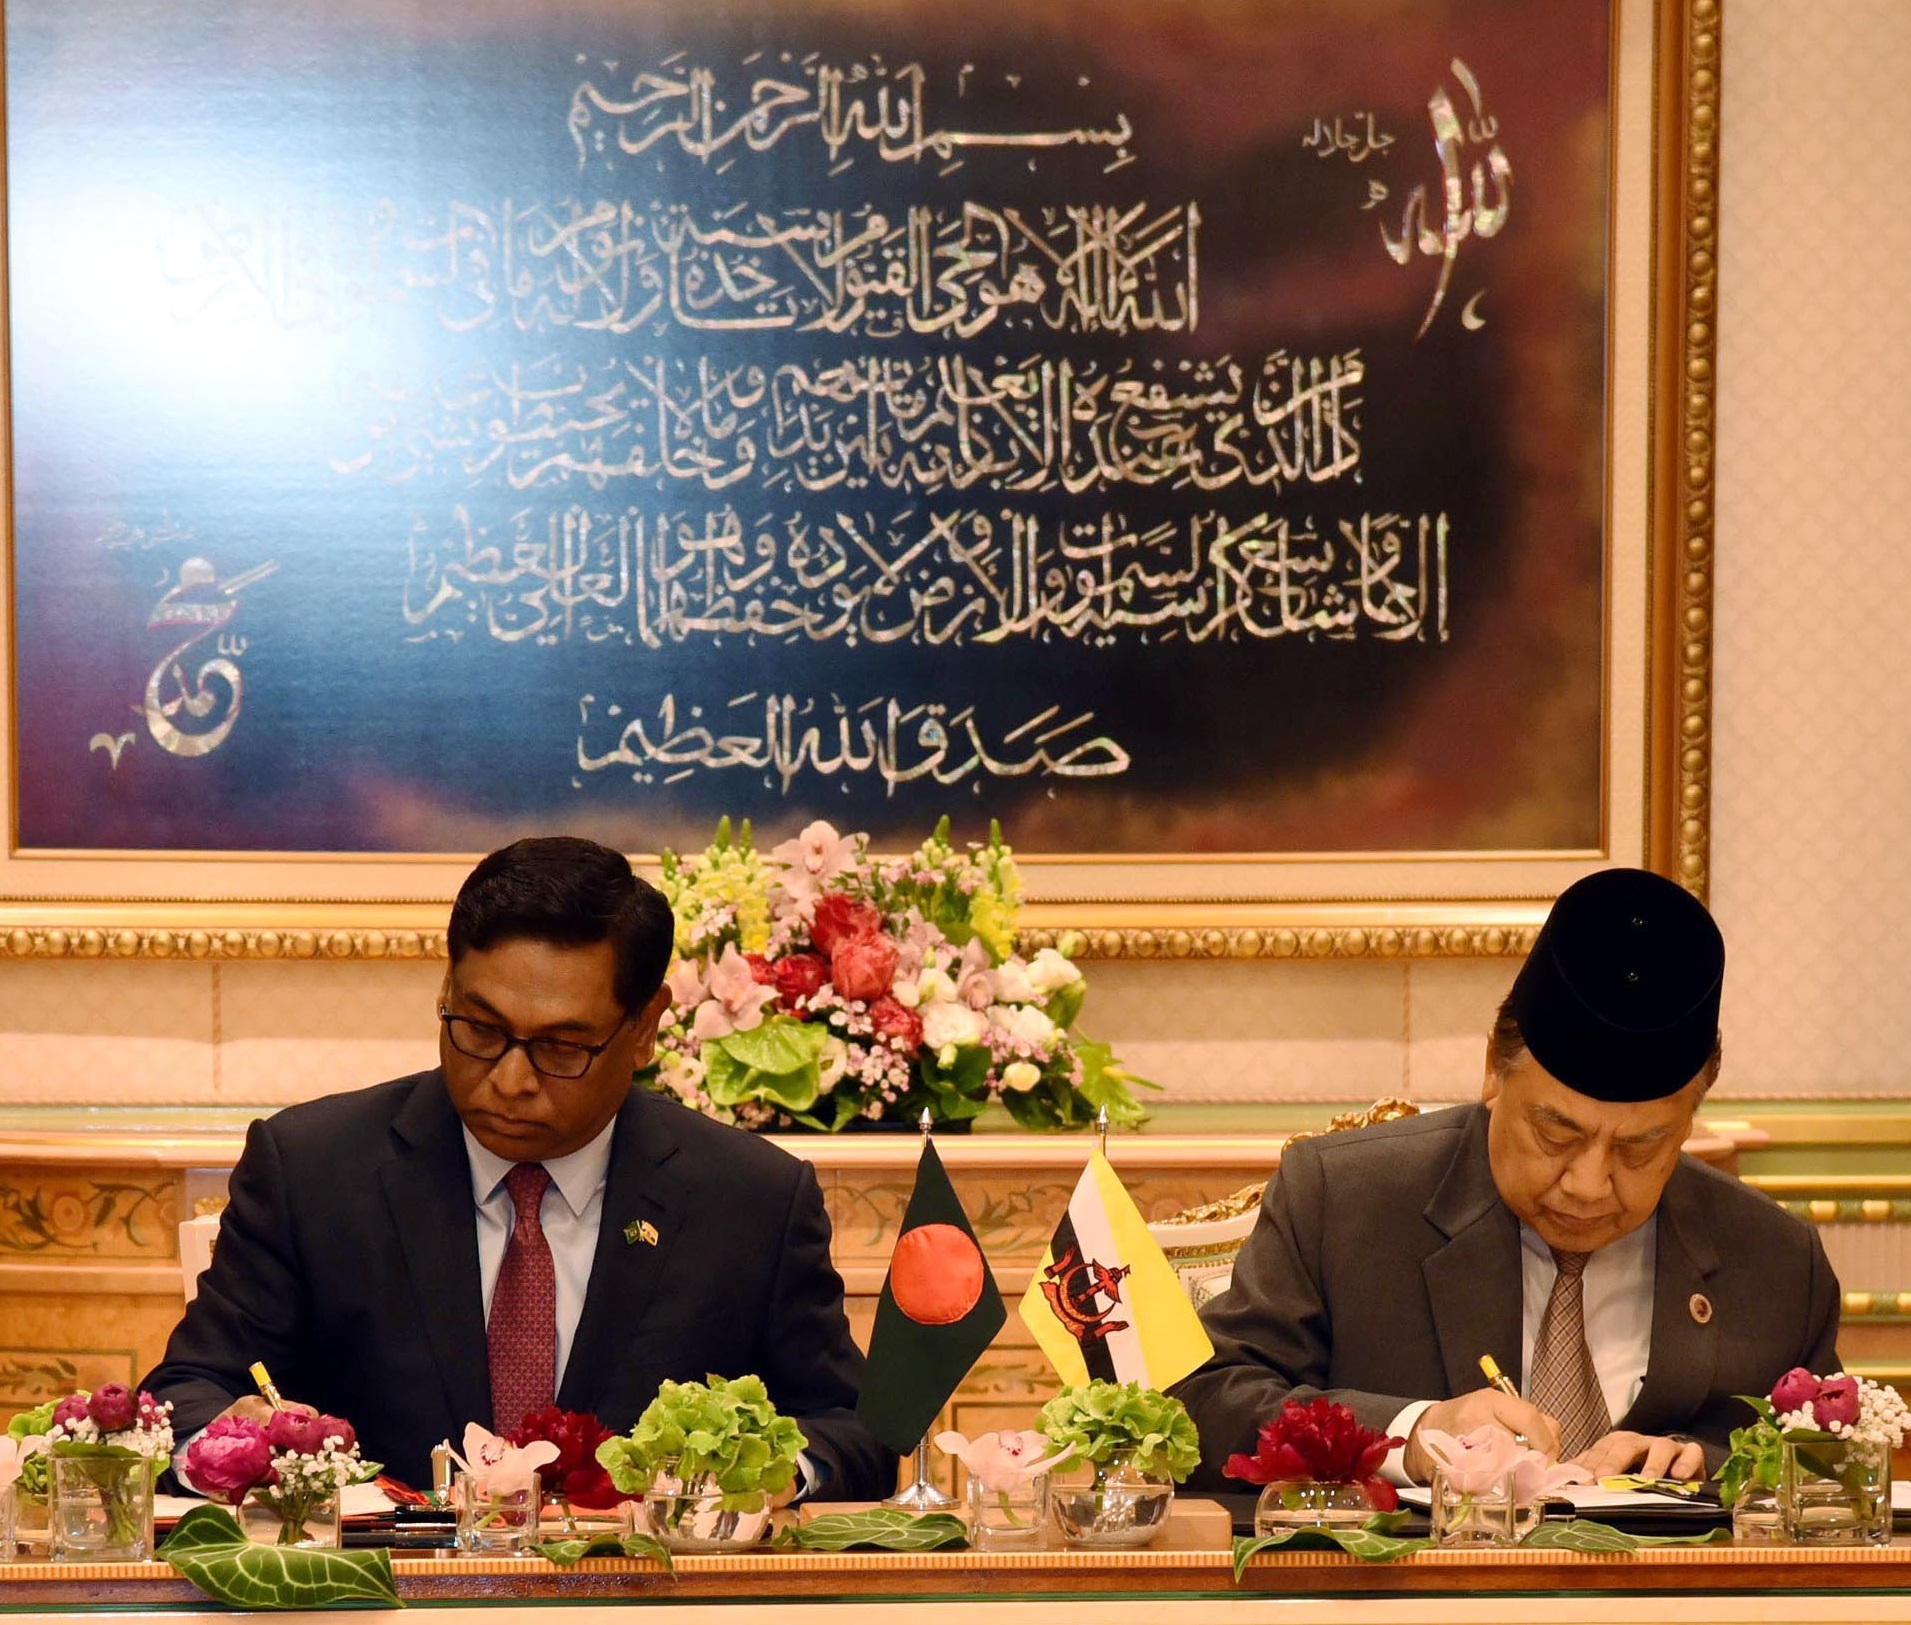 Bangladesh,Brunei sign 7 MoUs